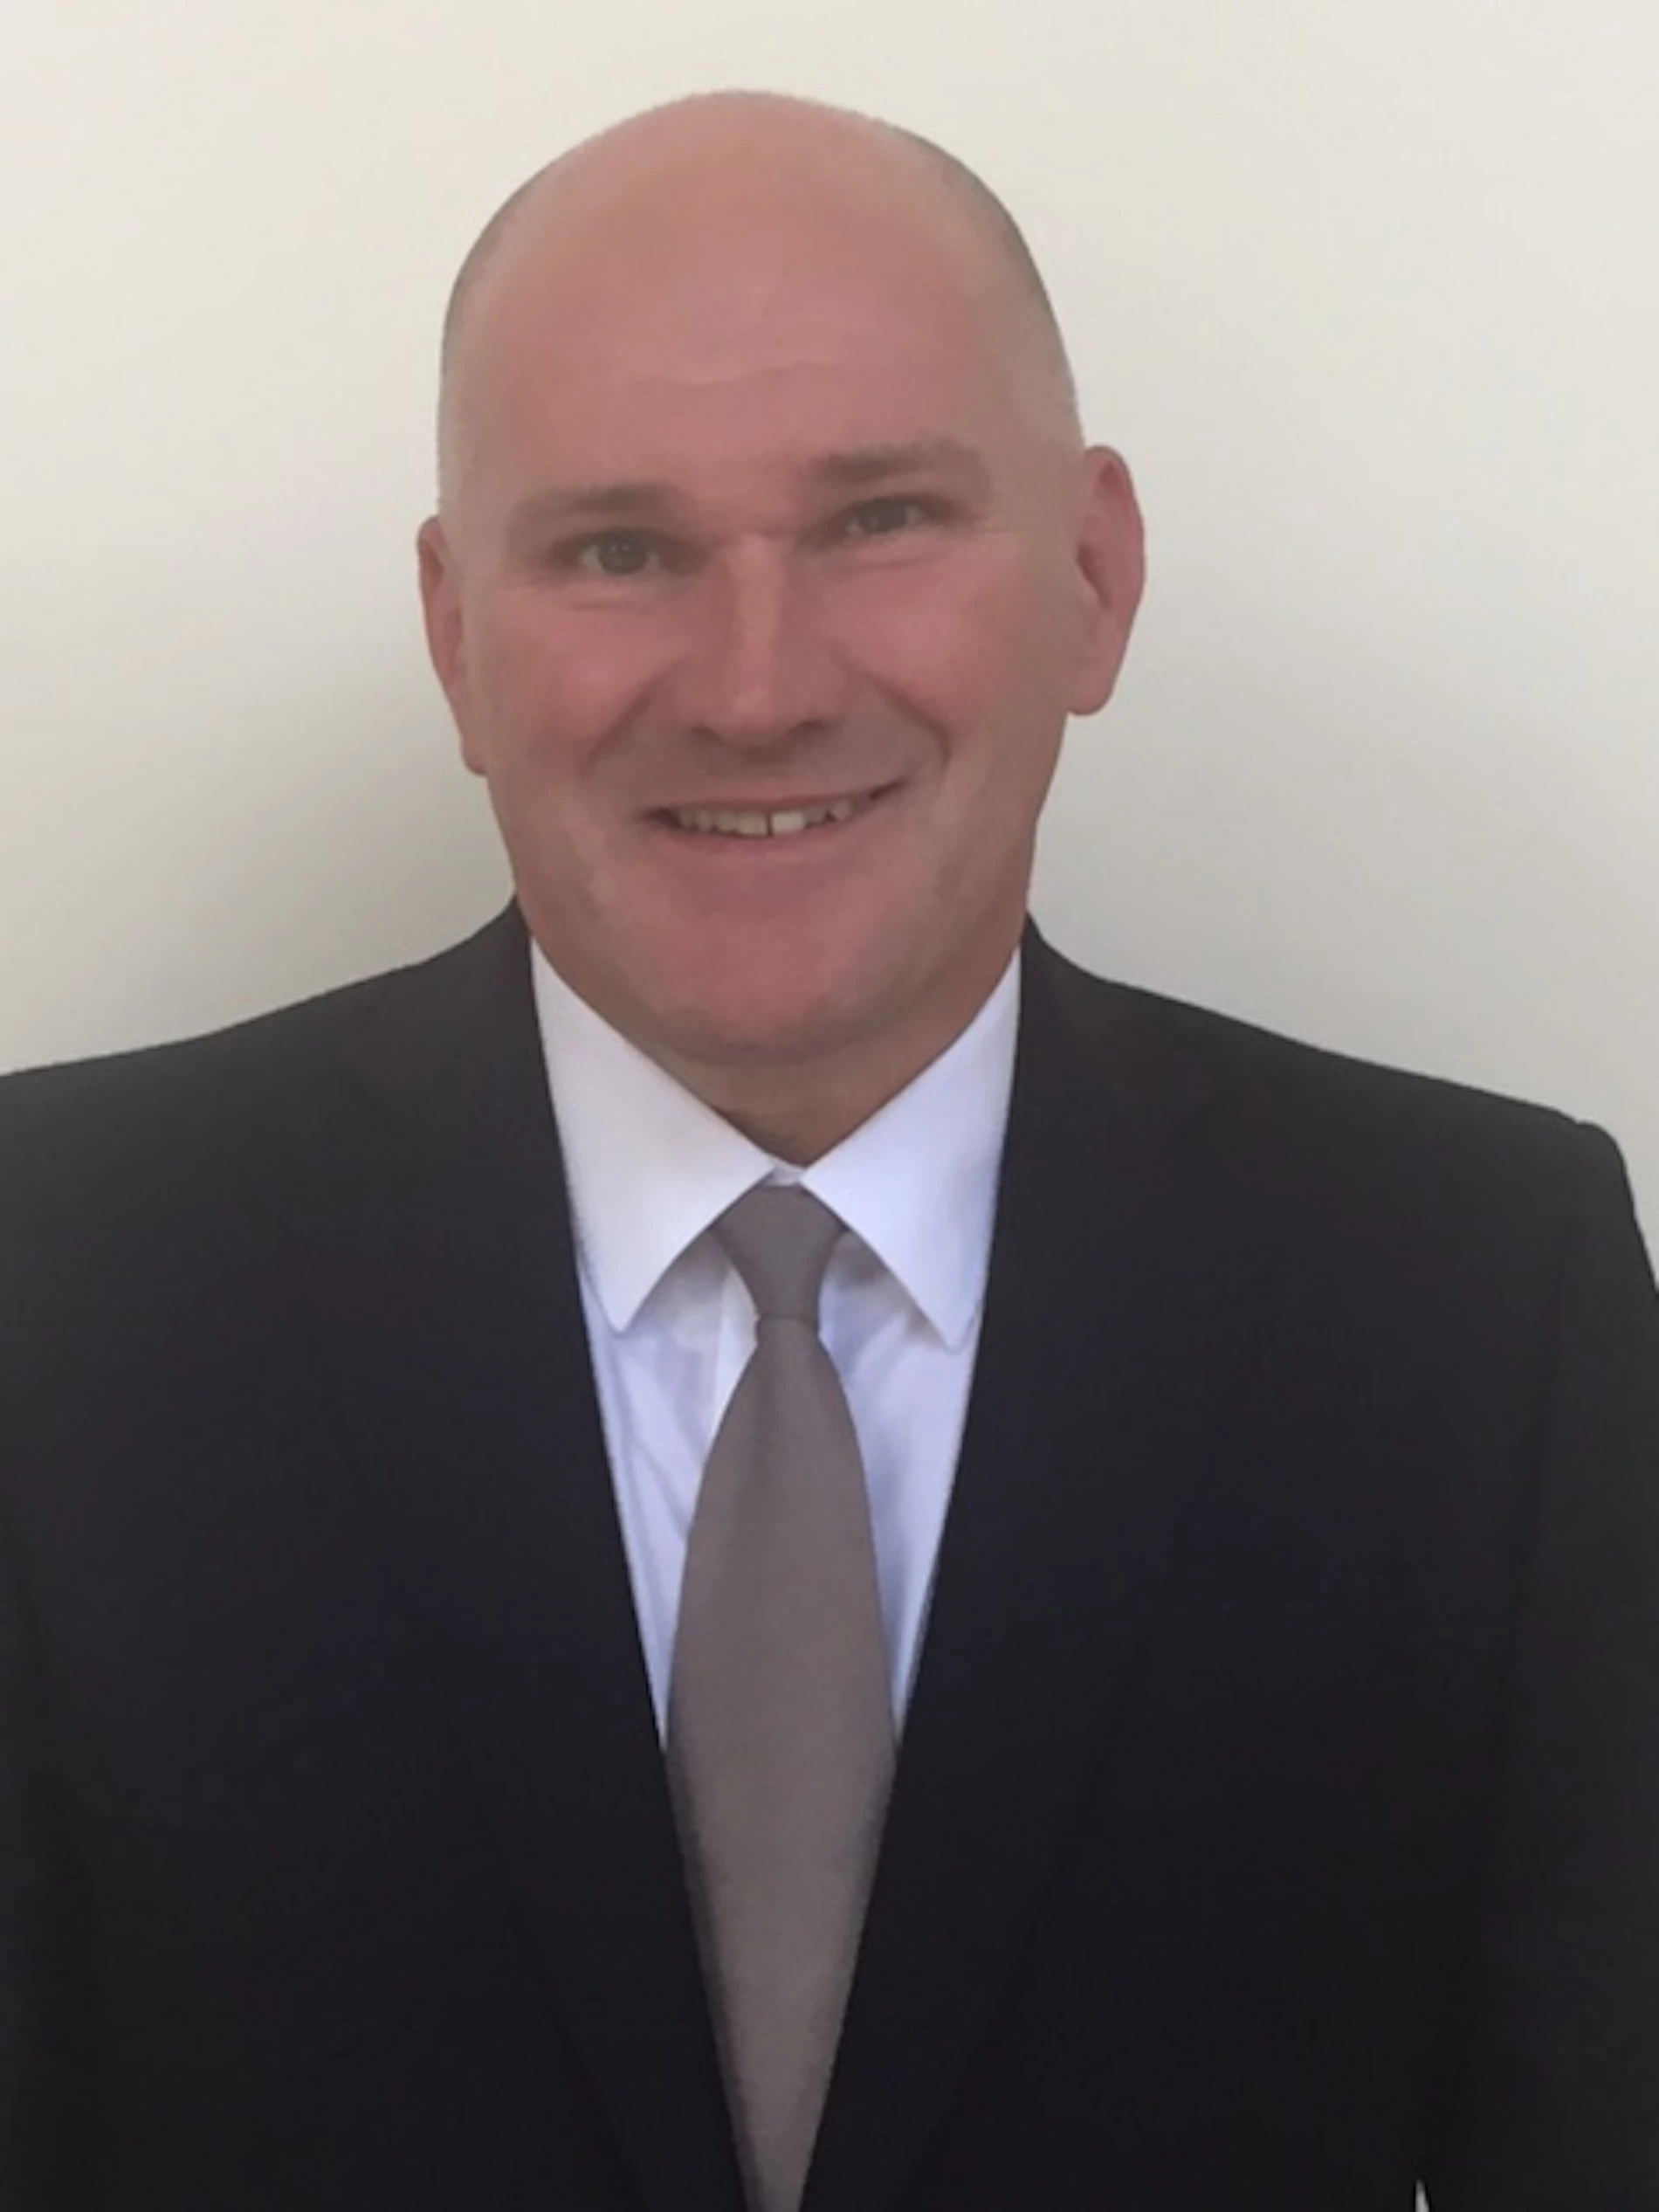 John Gribbon, regional director for Yorkshire at Secure Trust Bank Commercial Finance